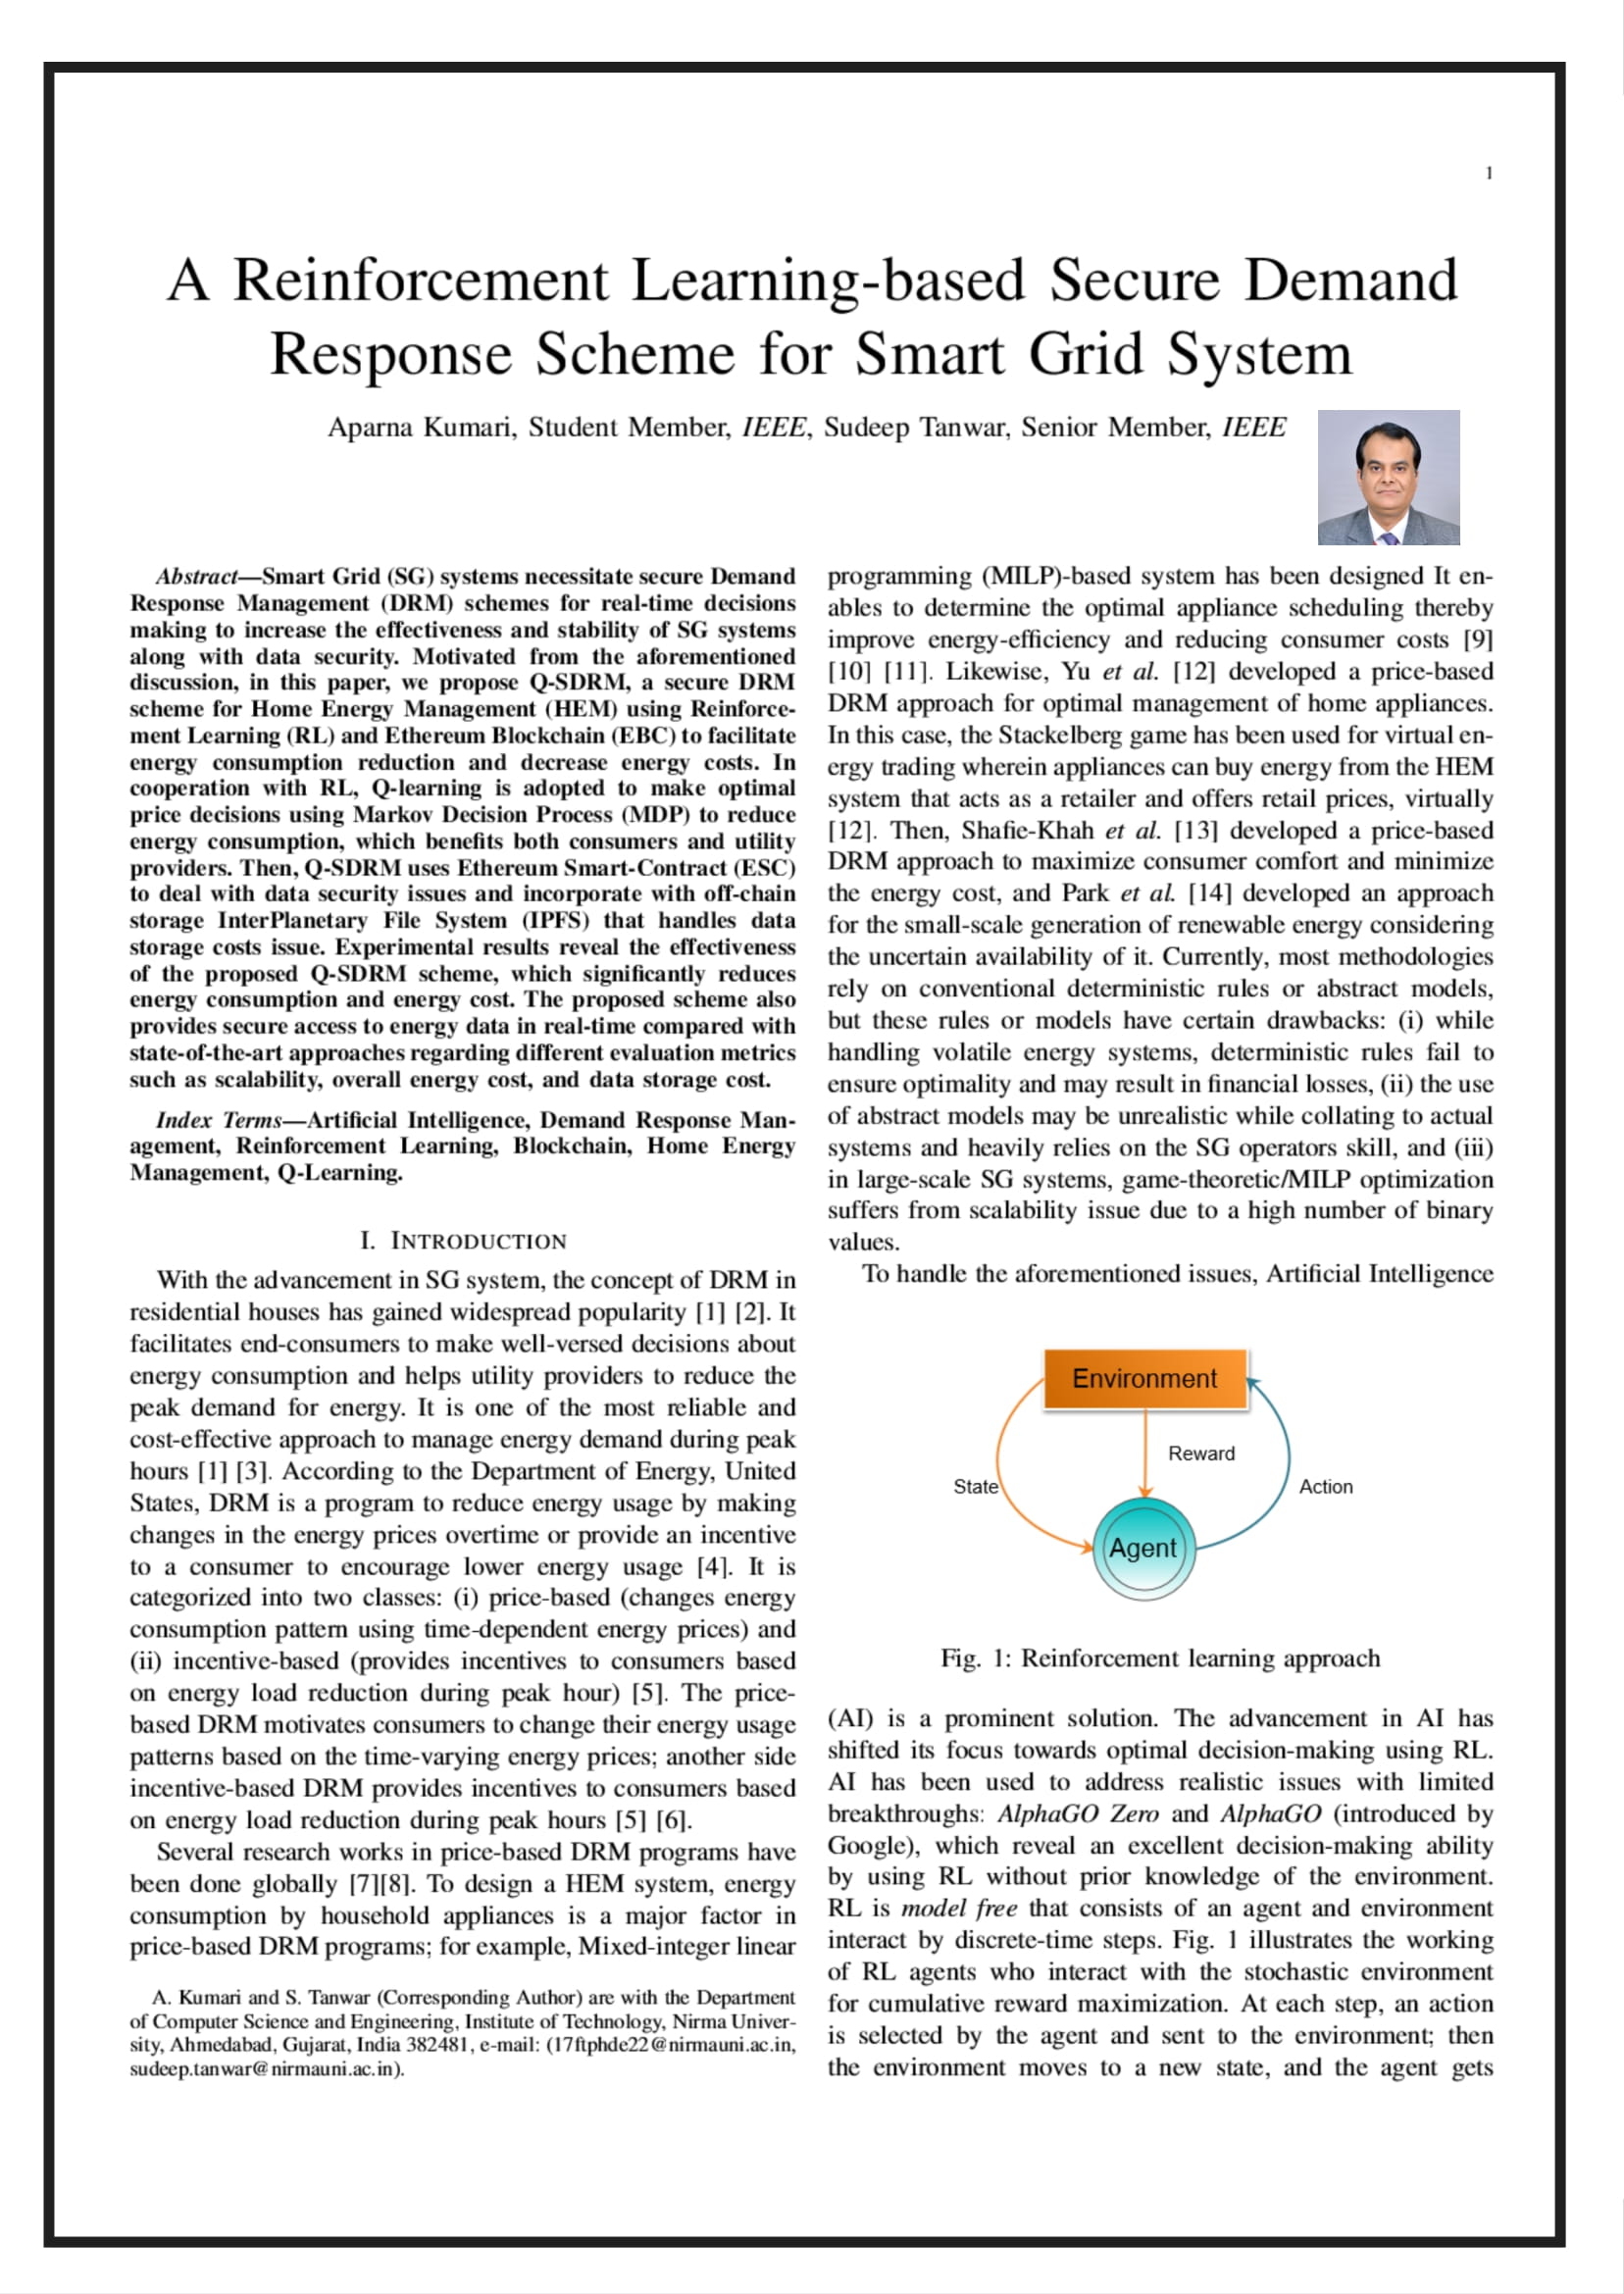 A Reinforcement Learning-based Secure Demand Response Scheme for Smart Grid System